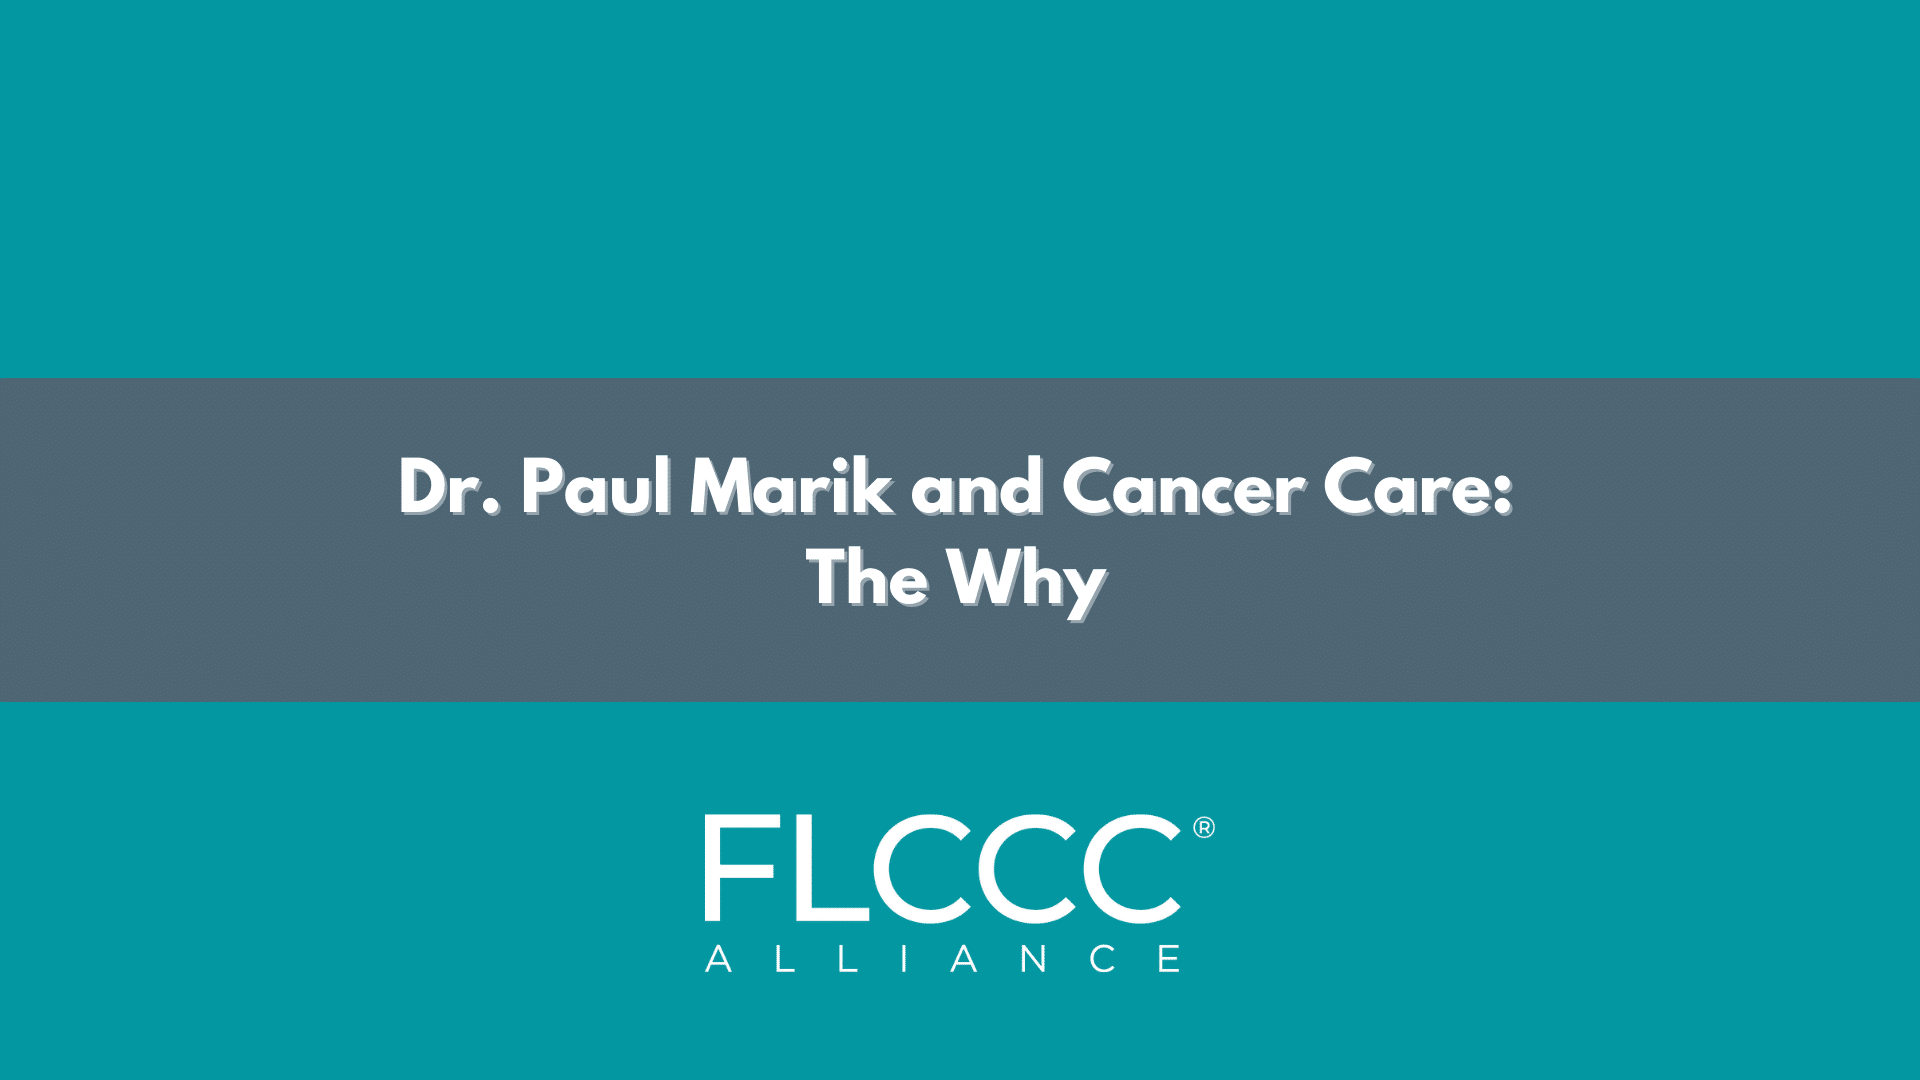 Cancer Care - FLCCC Alliance